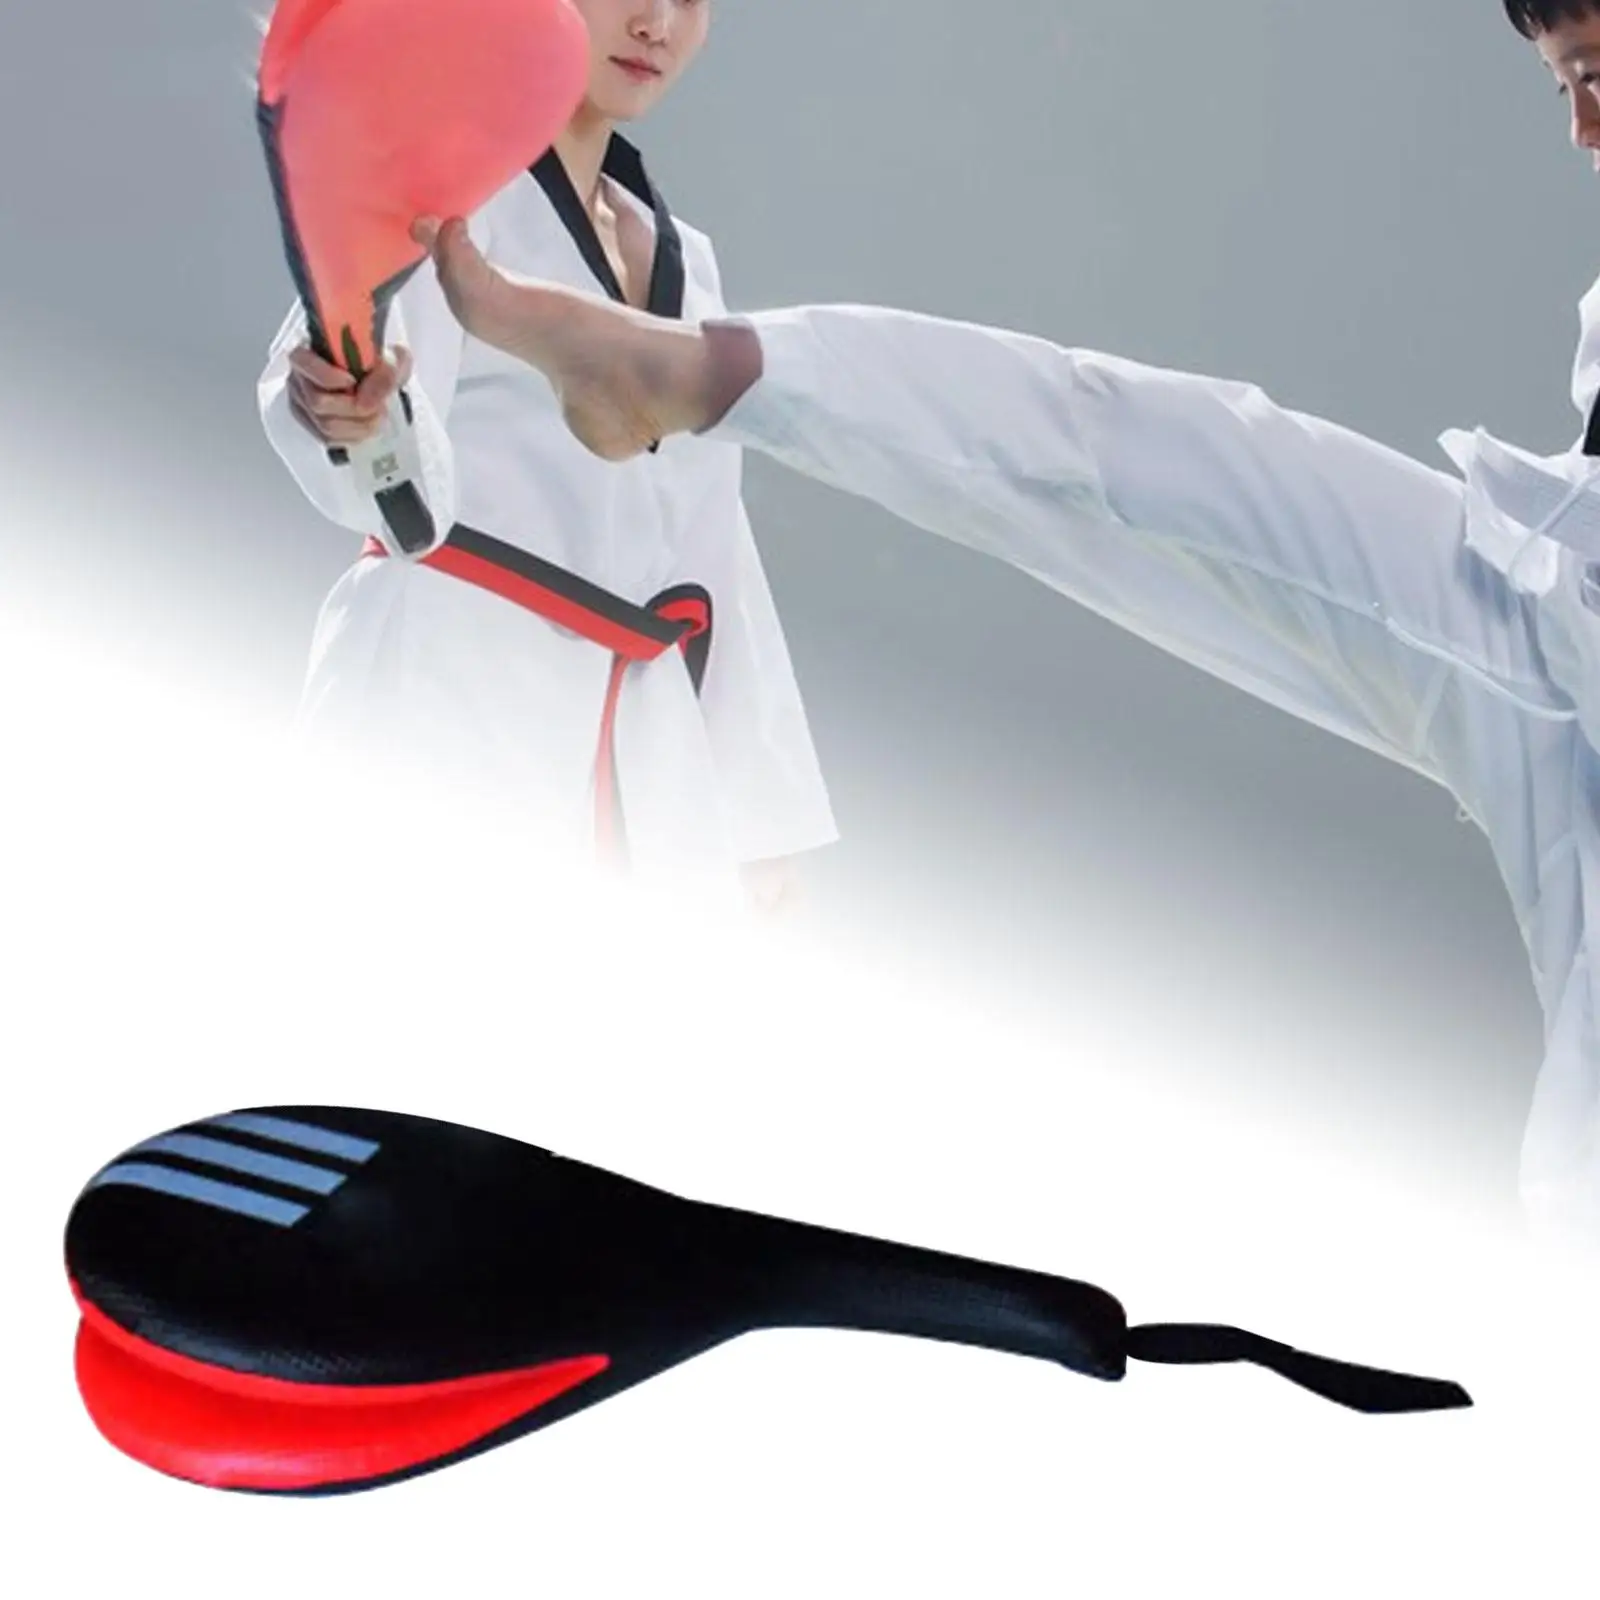 Taekwondo Kick Pad Kick Target Flexible Accessories Sporting Goods Paddle for Practicing High and Low Kicks Foot Hand Target